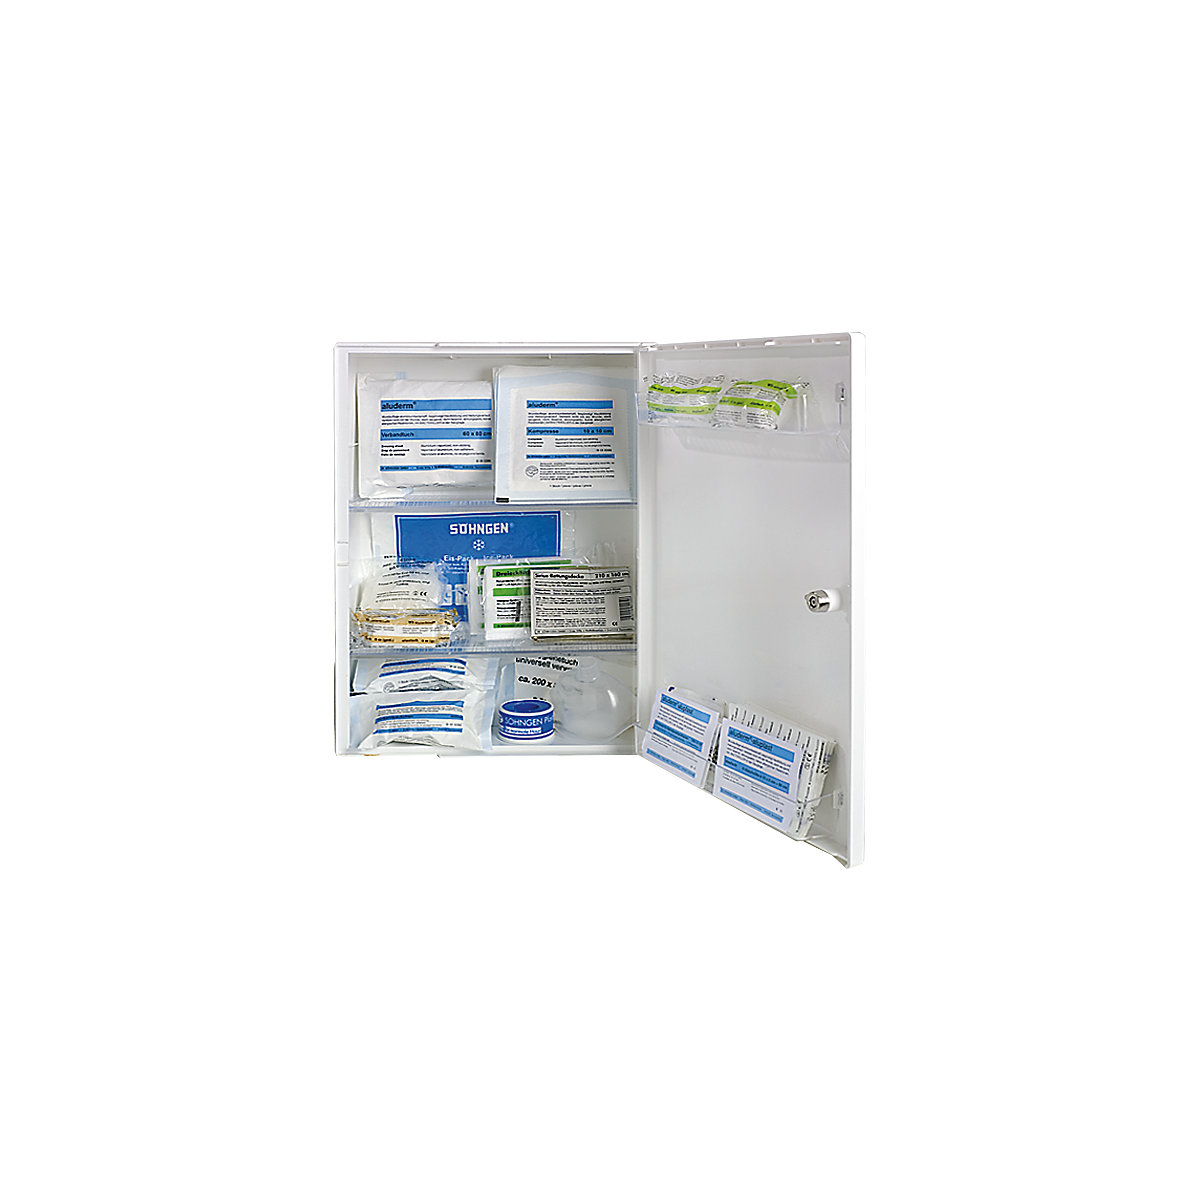 First aid cupboard, DIN 13157 – SÖHNGEN